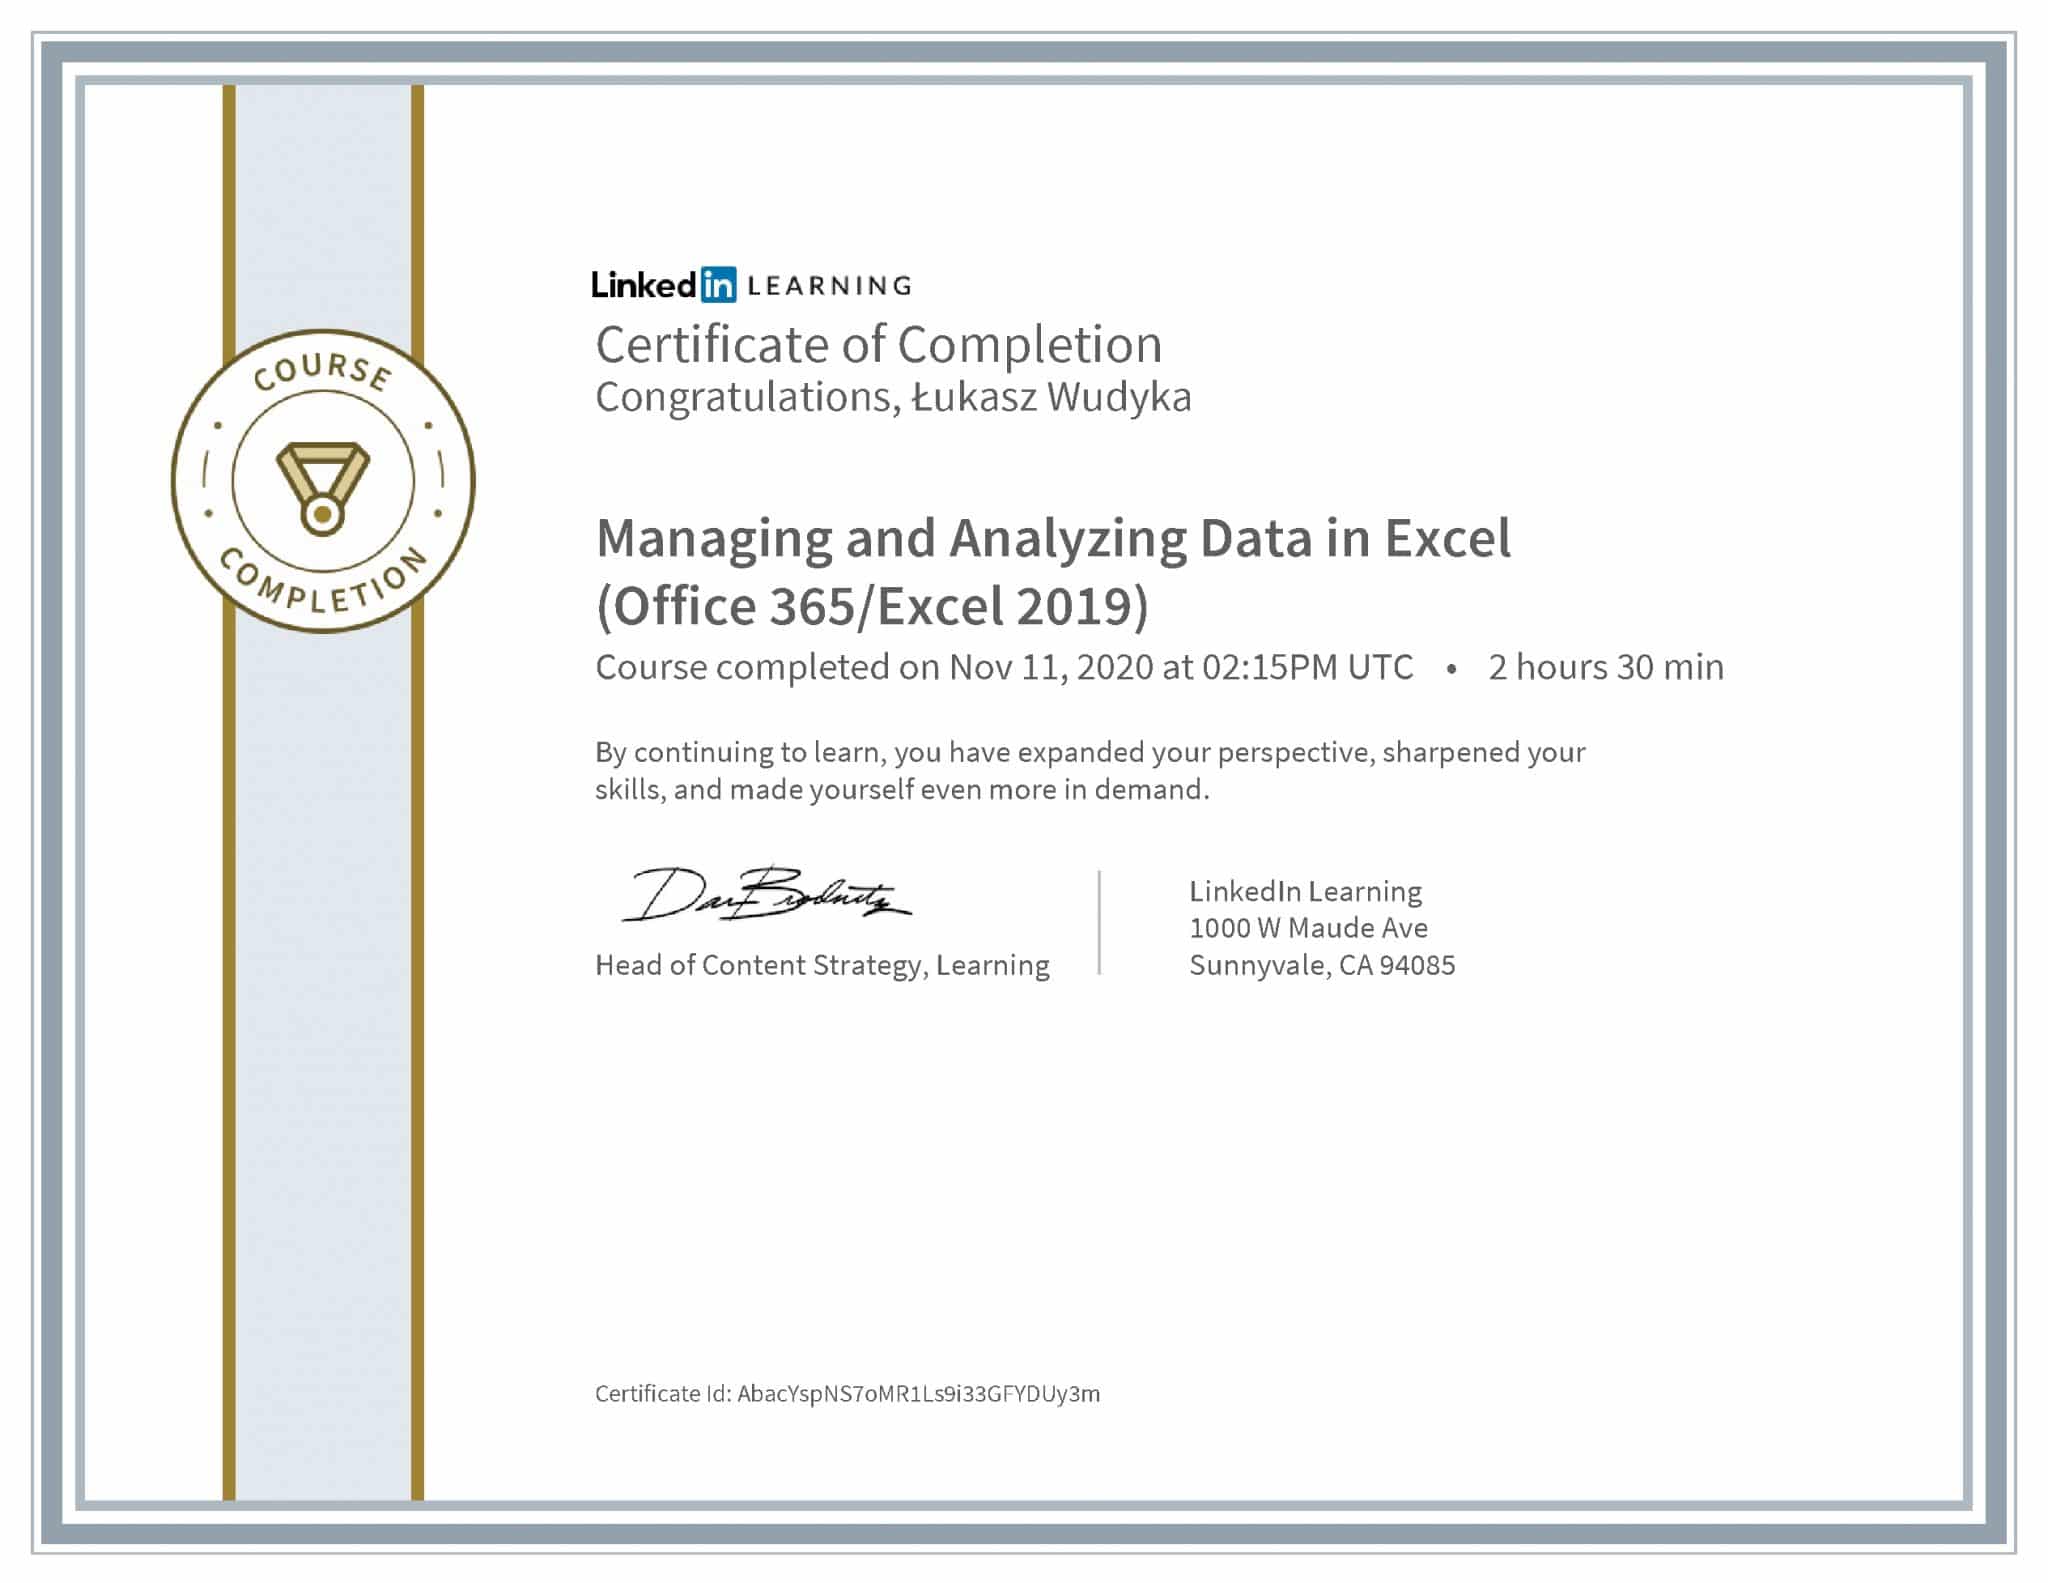 Łukasz Wudyka certyfikat LinkedIn Managing and Analyzing Data in Excel (Office 365/Excel 2019)